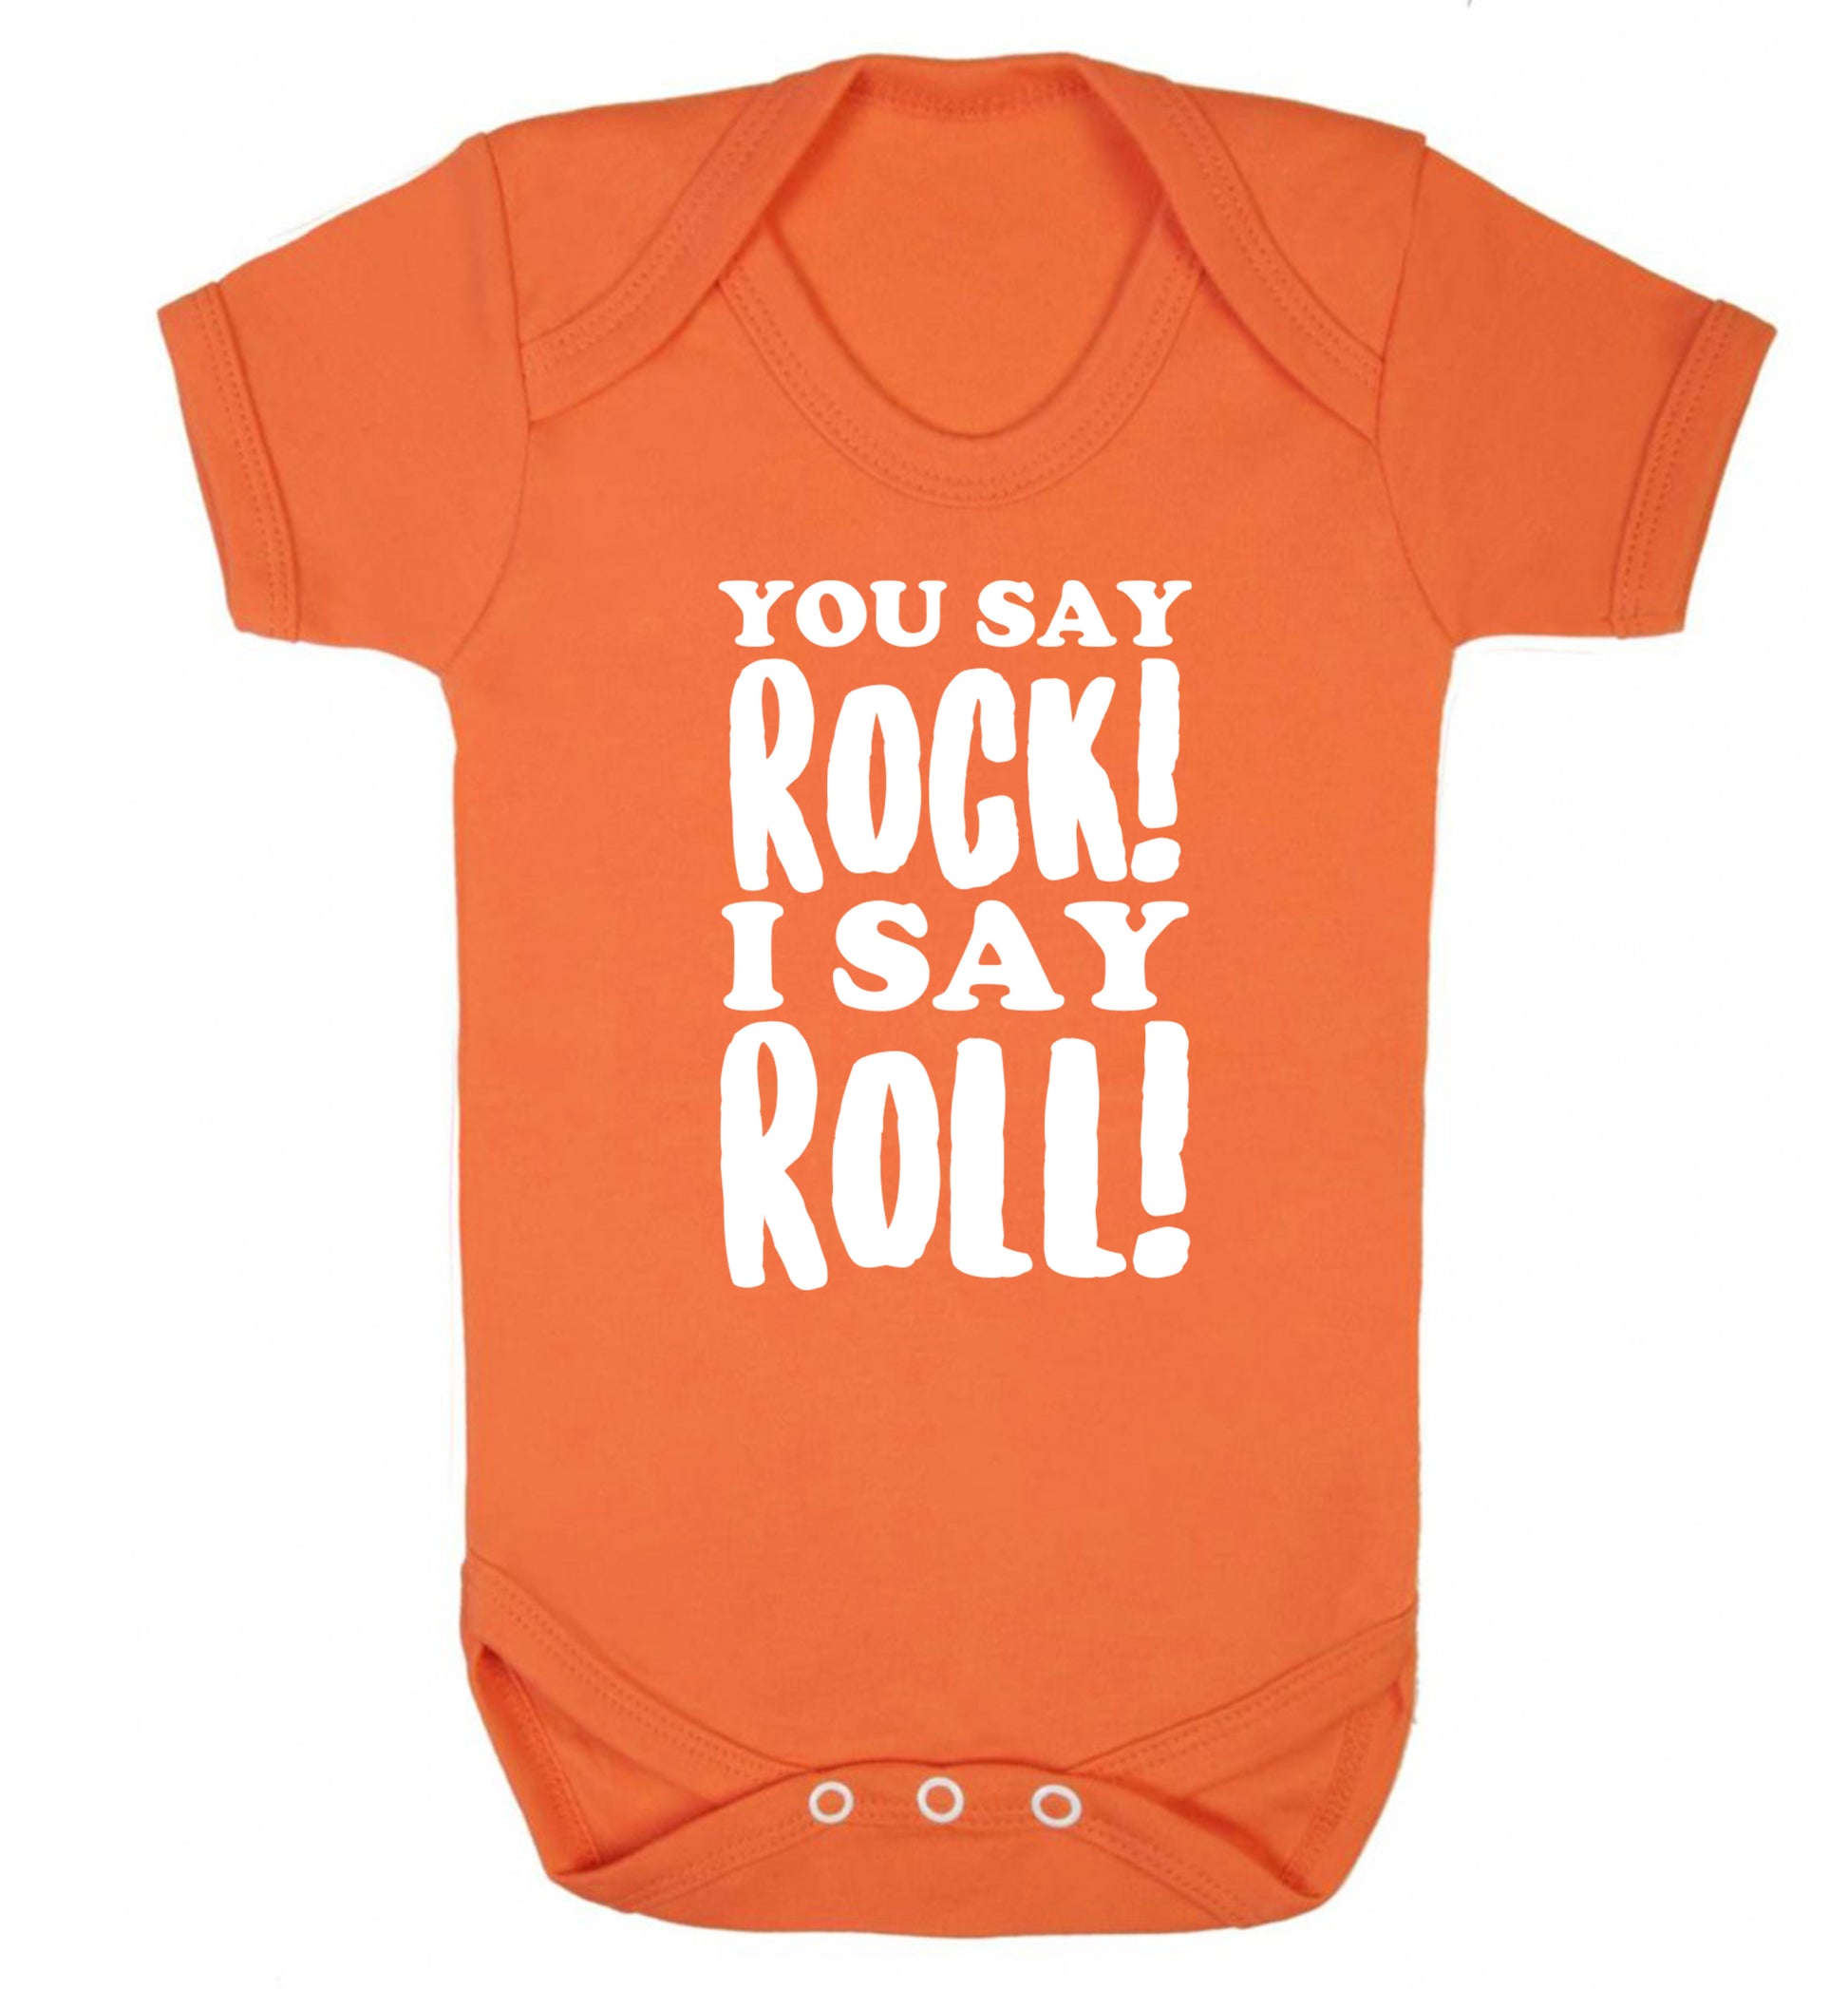 You say rock I say roll! Baby Vest orange 18-24 months